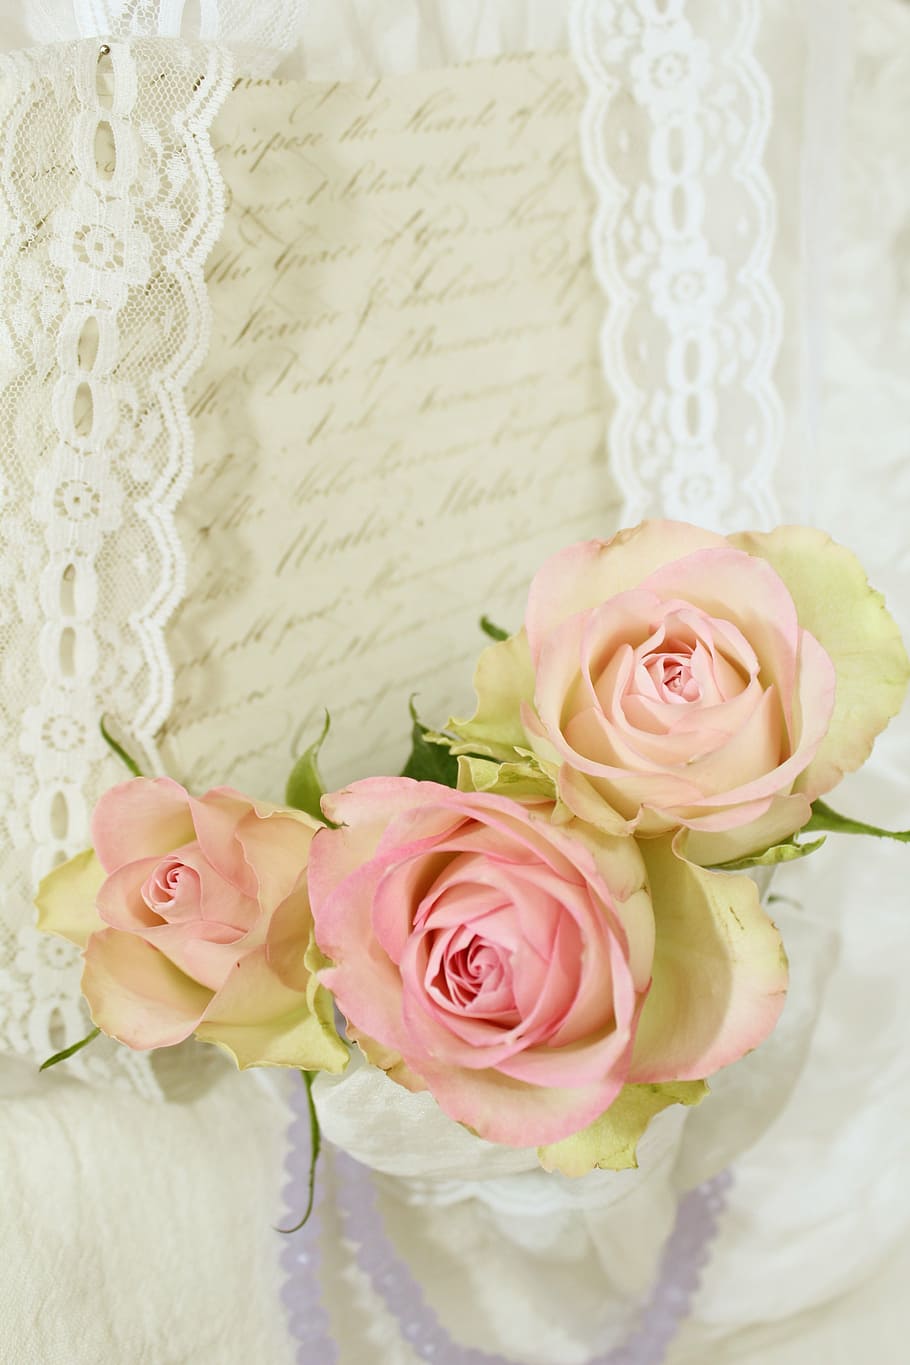 pink, yellow, rose, flowers, roses, romantic, invitation, vintage, wedding, love letter